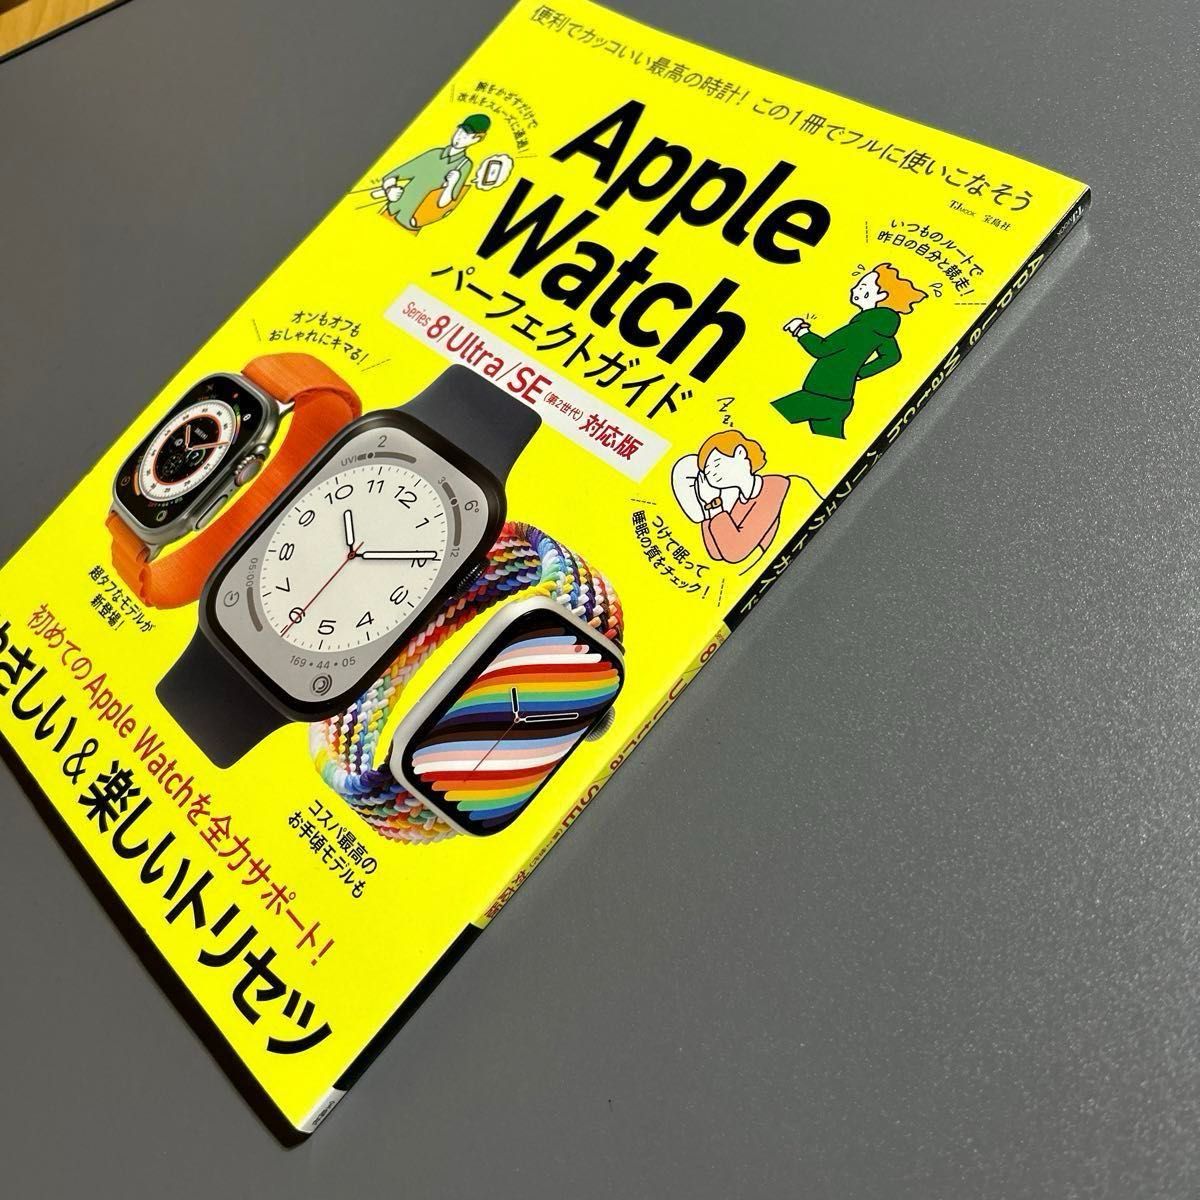 Apple Watch パーフェクトガイド Series 8/Ultra/SE